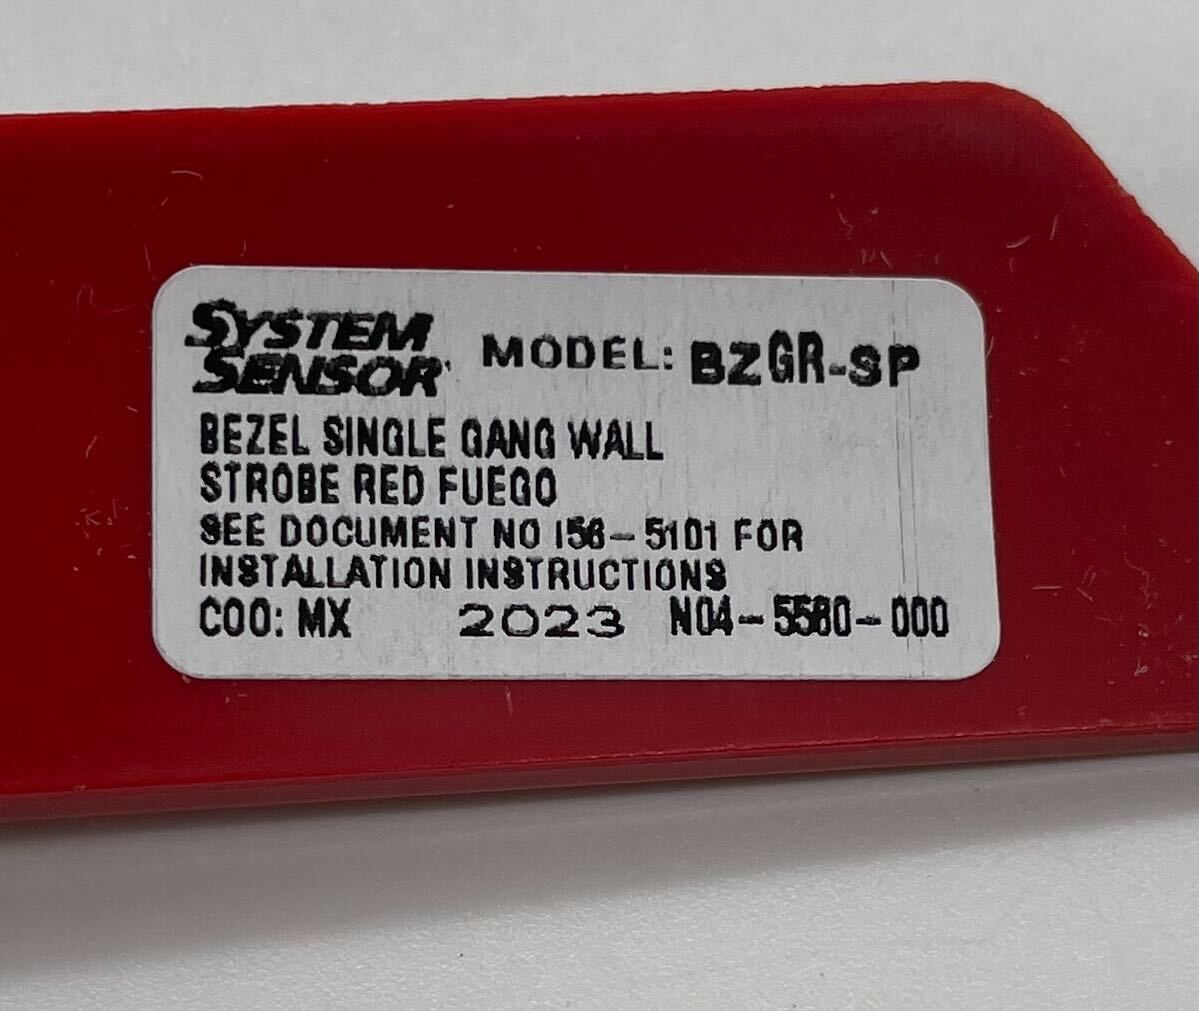 System Sensor BZGR-SP - The Fire Alarm Supplier